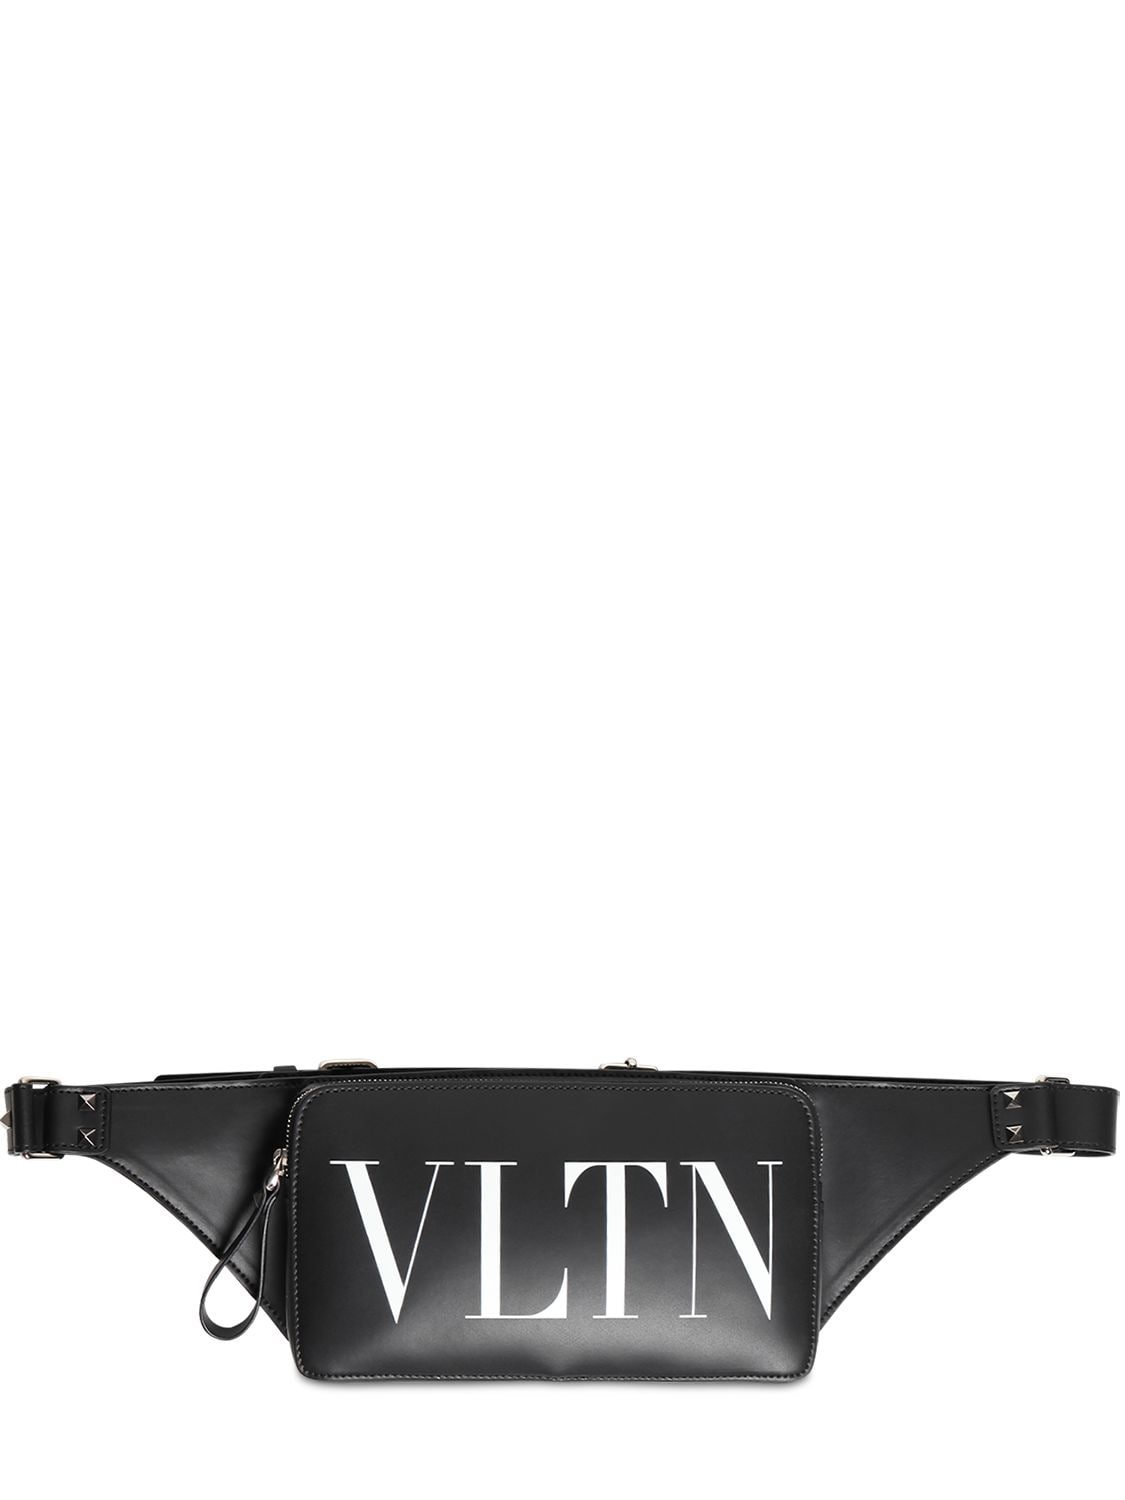 Valentino Garavani Men's Vltn Leather Waist Satchel In Black/white ...